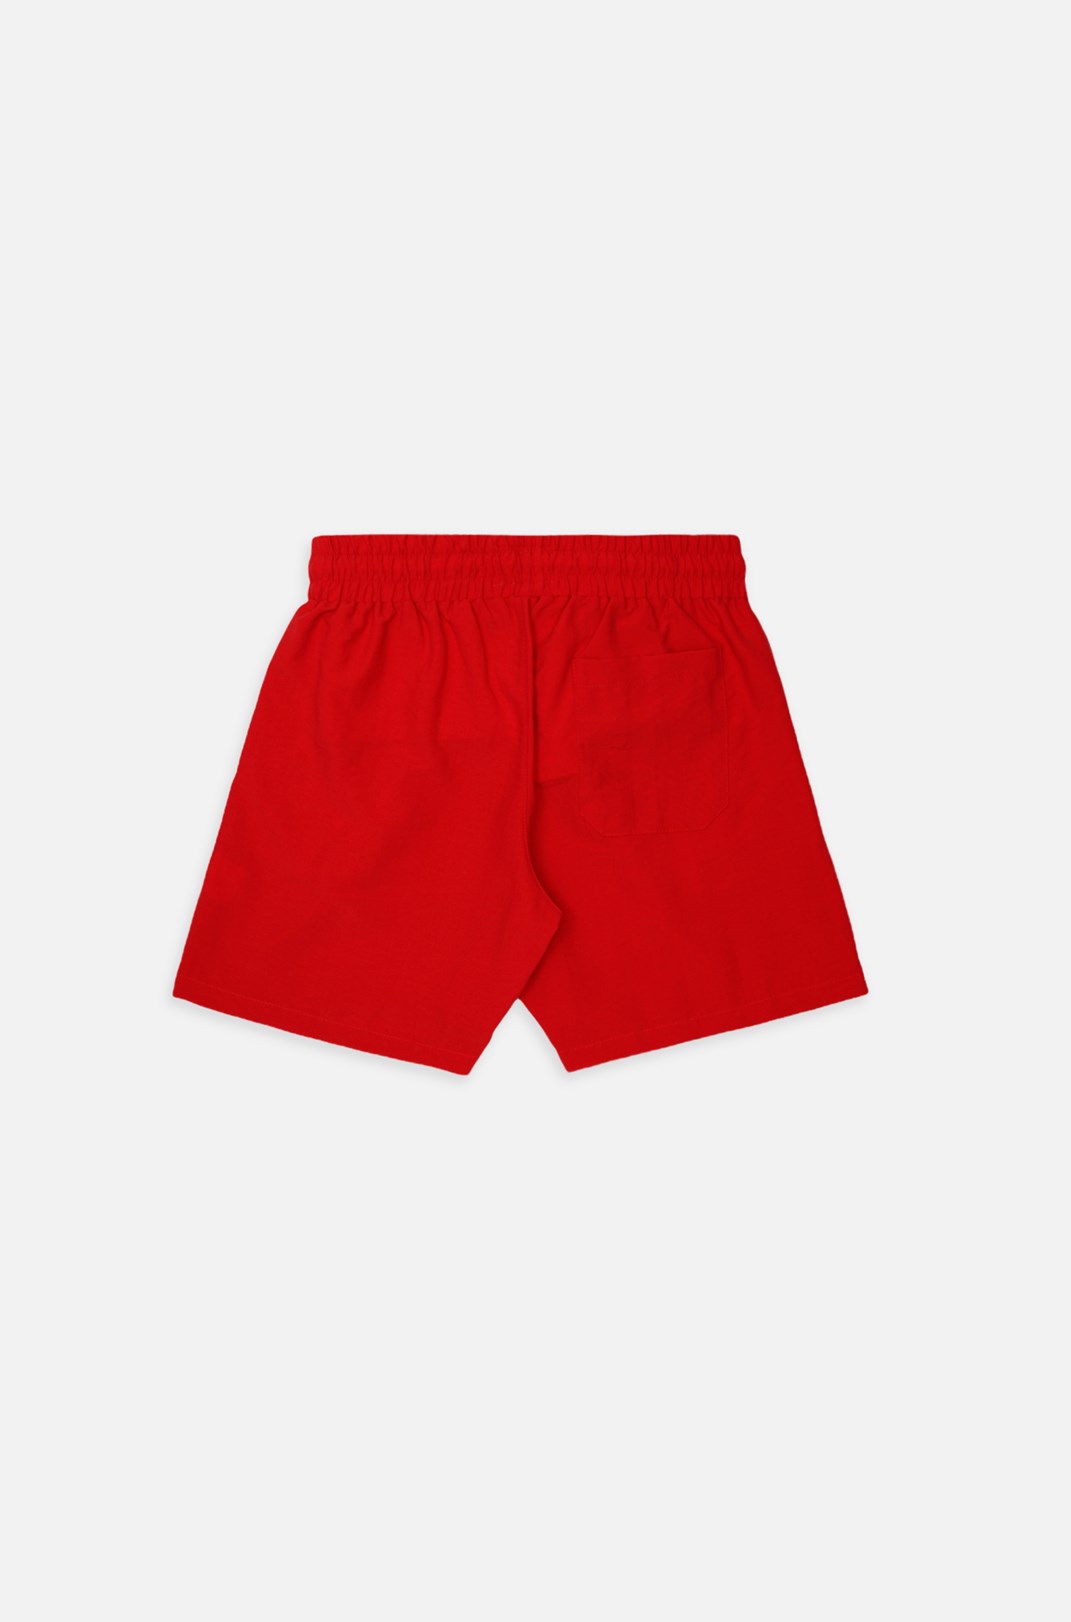 Shorts Approve Vermelho